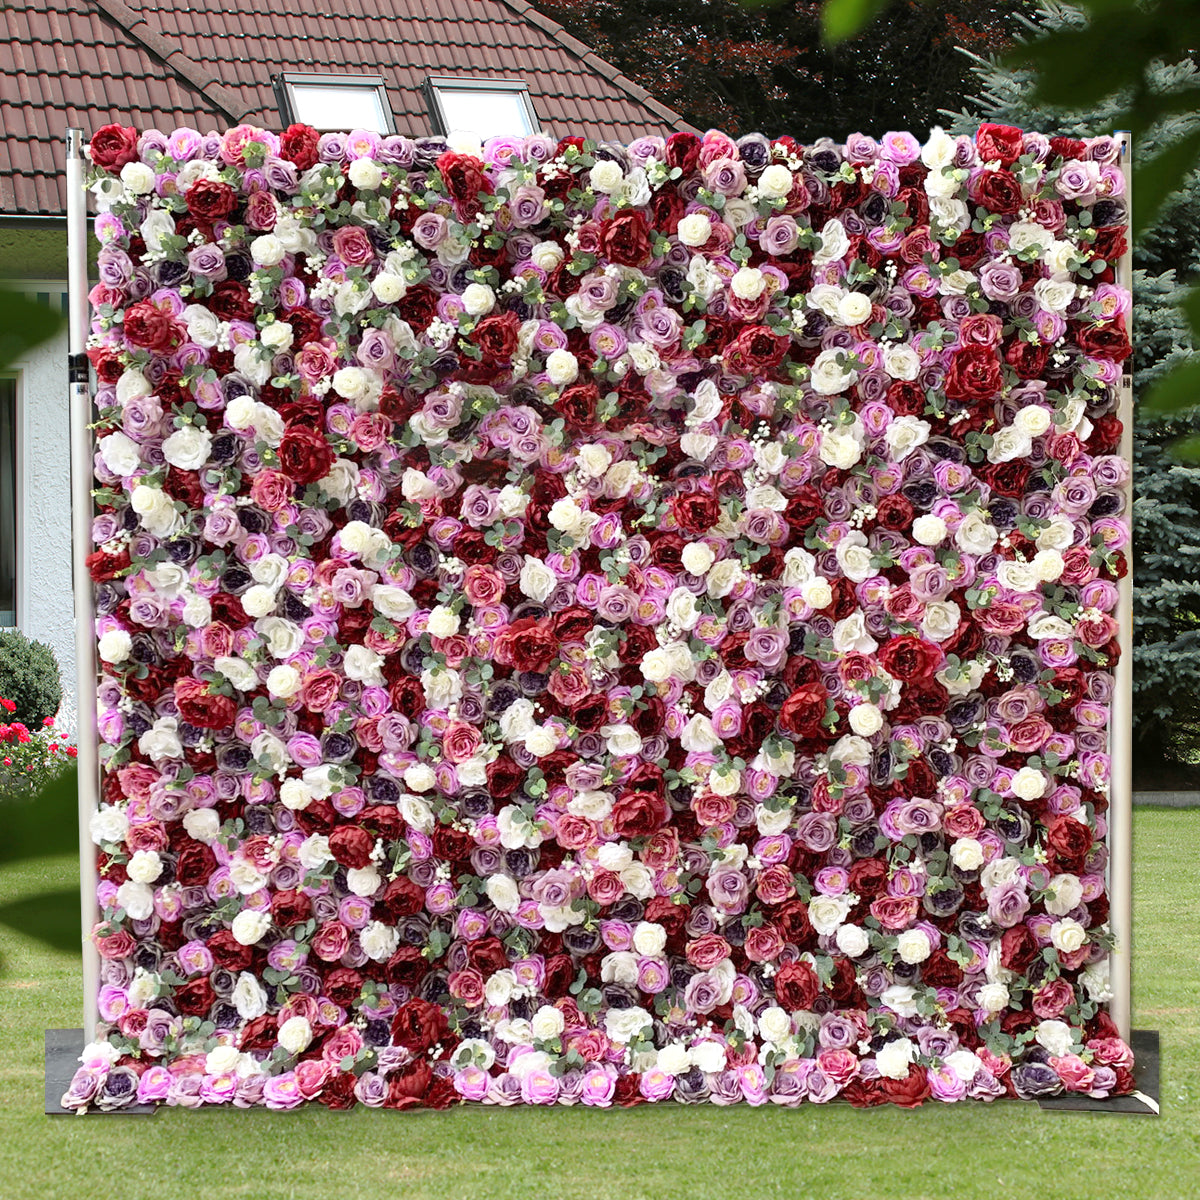 3D Artificial Flower Wall Arrangement Wedding Party Birthday Backdrop Decor HQ1159